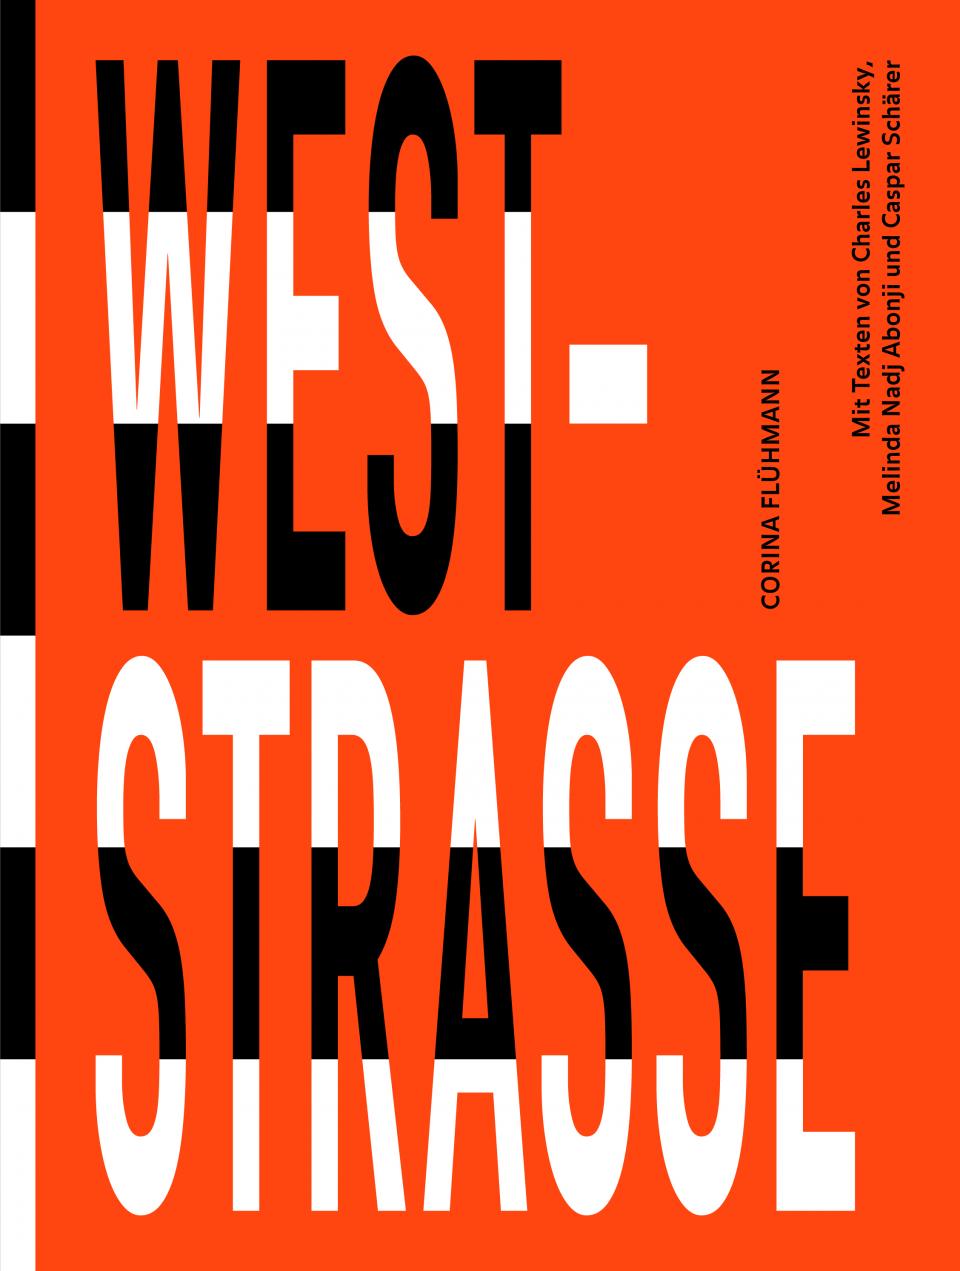 Bookcover "Weststrasse" by Corina Flühmann